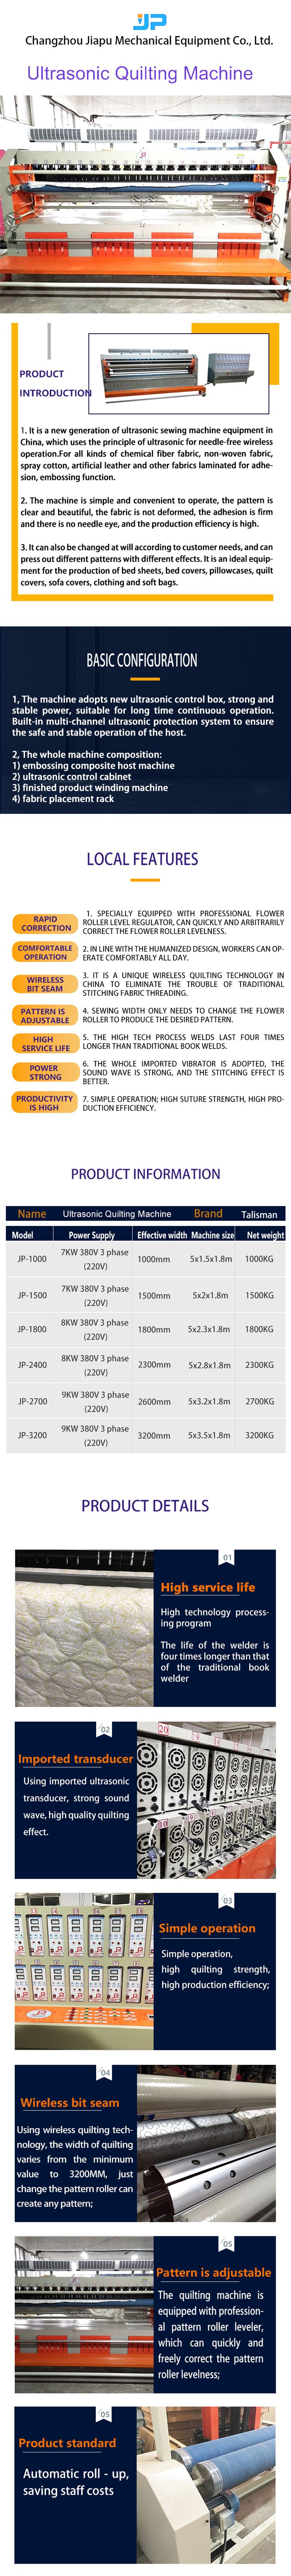 Manual ultrasonic quilting machine for mattress (CE)